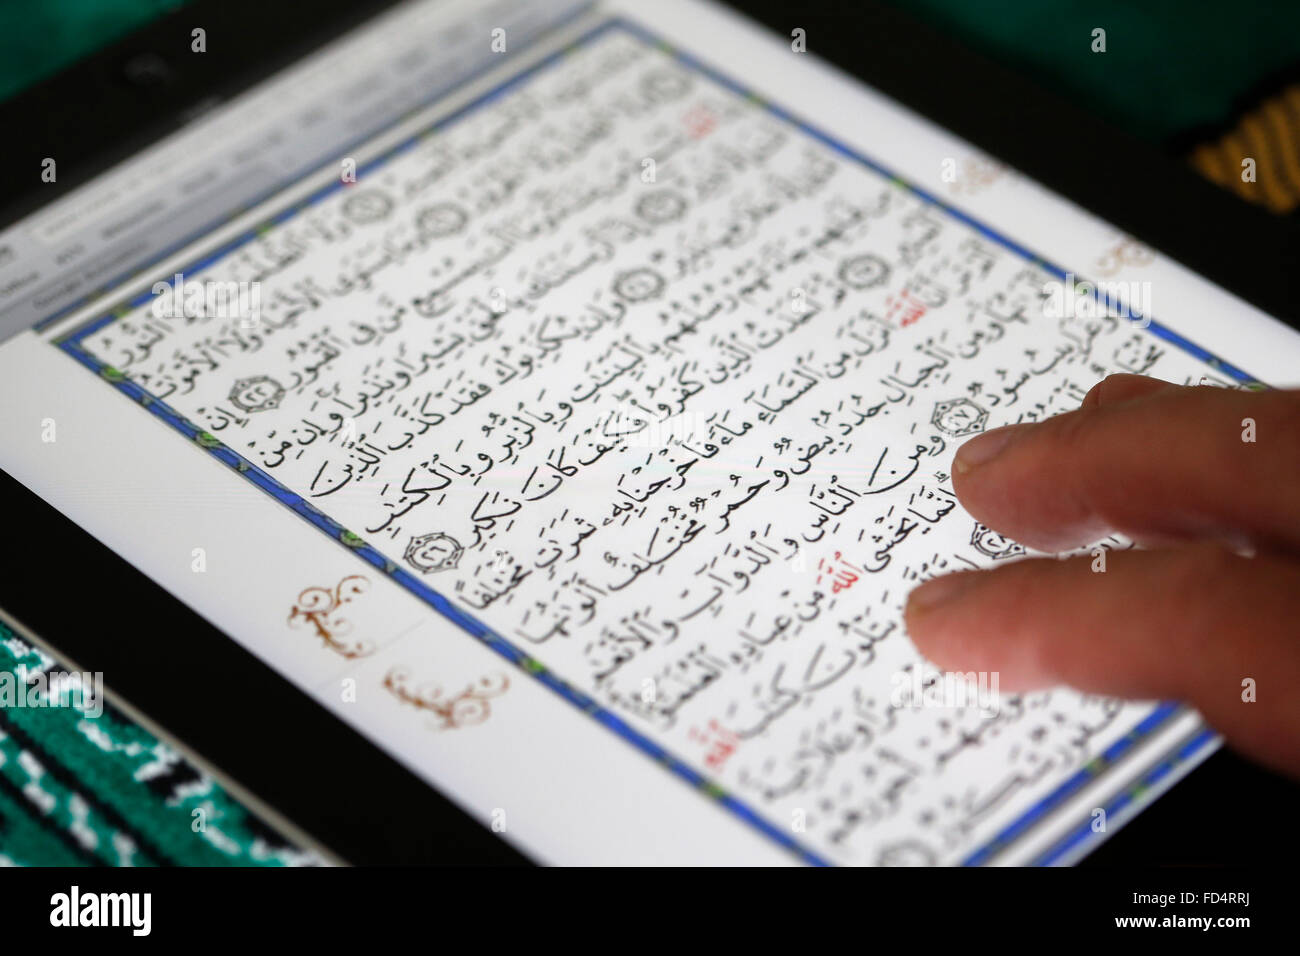 Electronic Quran on an Ipad. Stock Photo